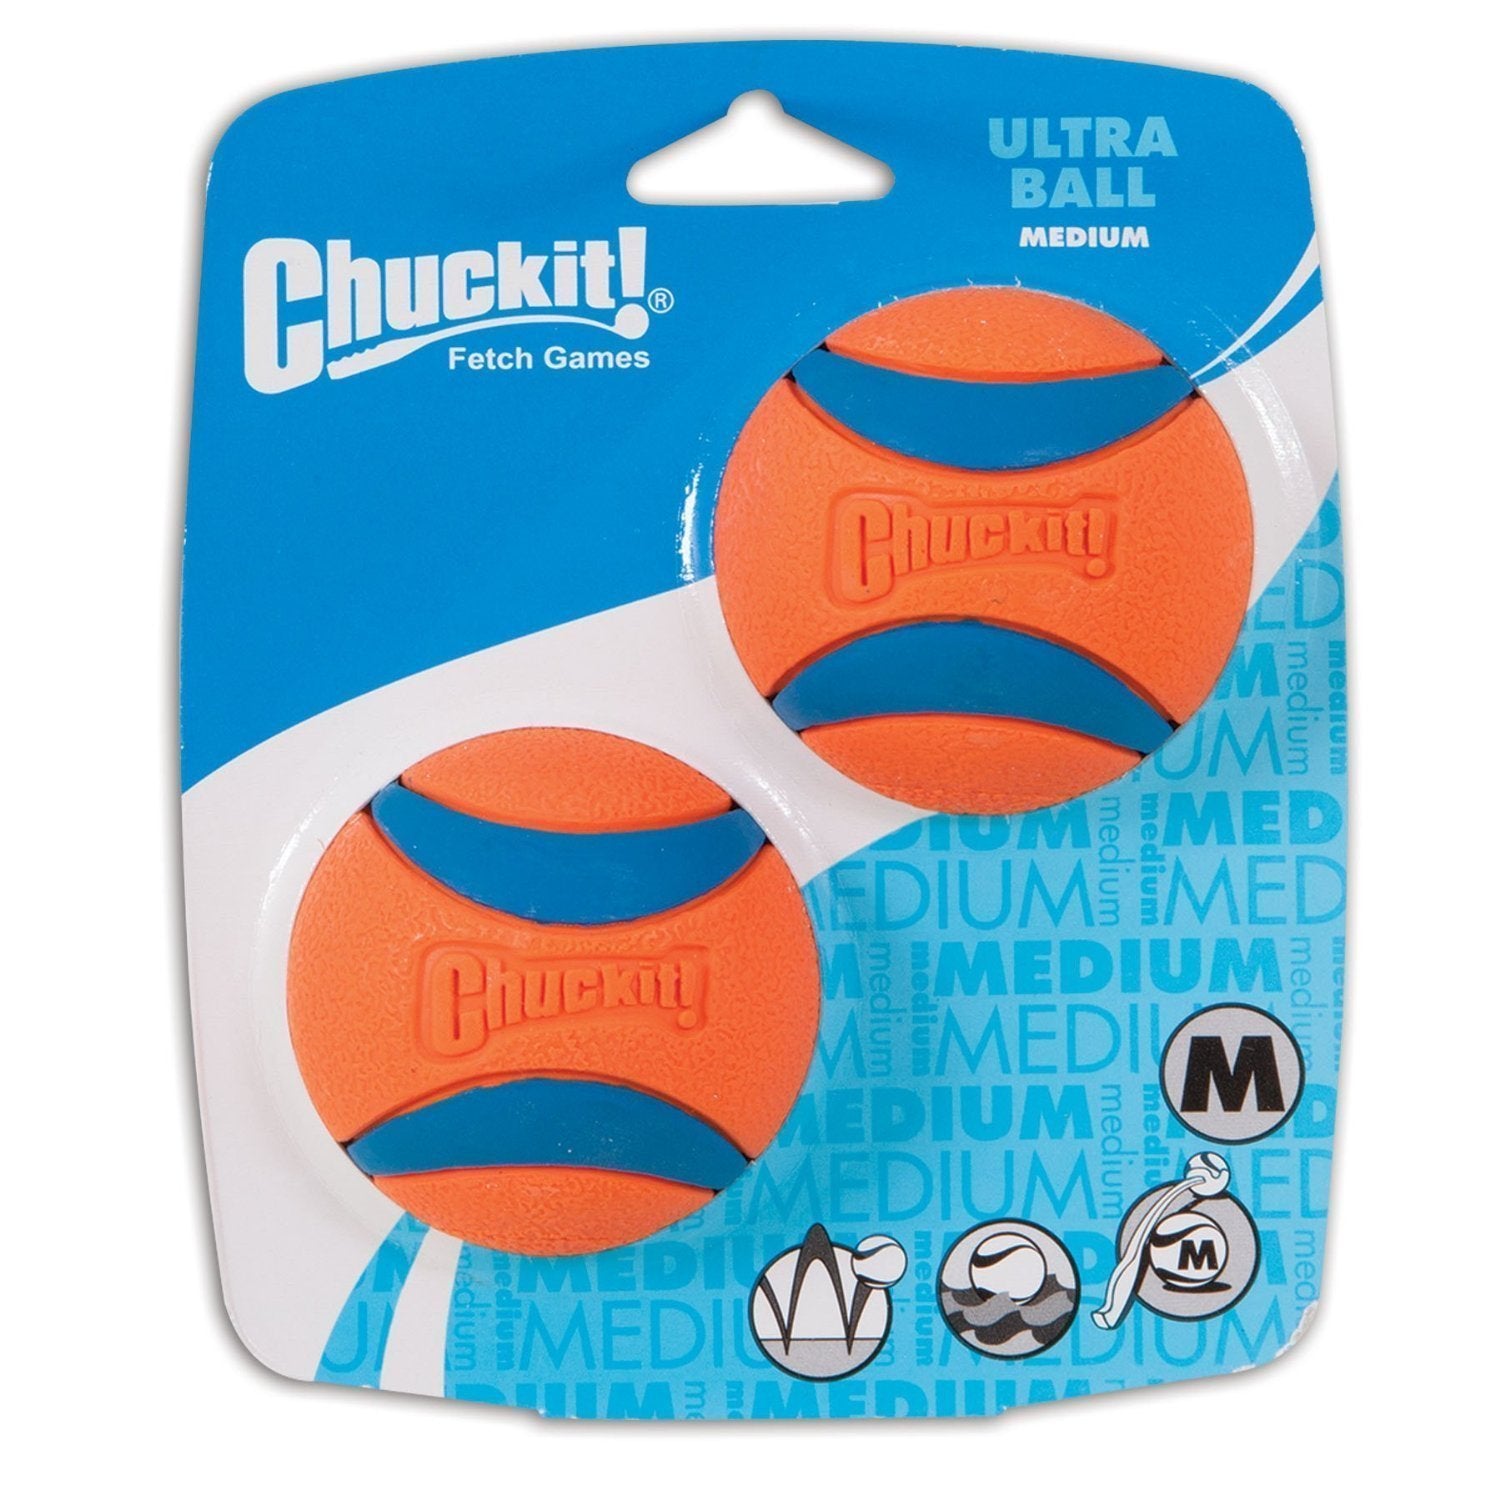 Canine Hardware Chuckit! Ultra Ball, Medium, 2.5-Inch, 4-Pack, Petmate